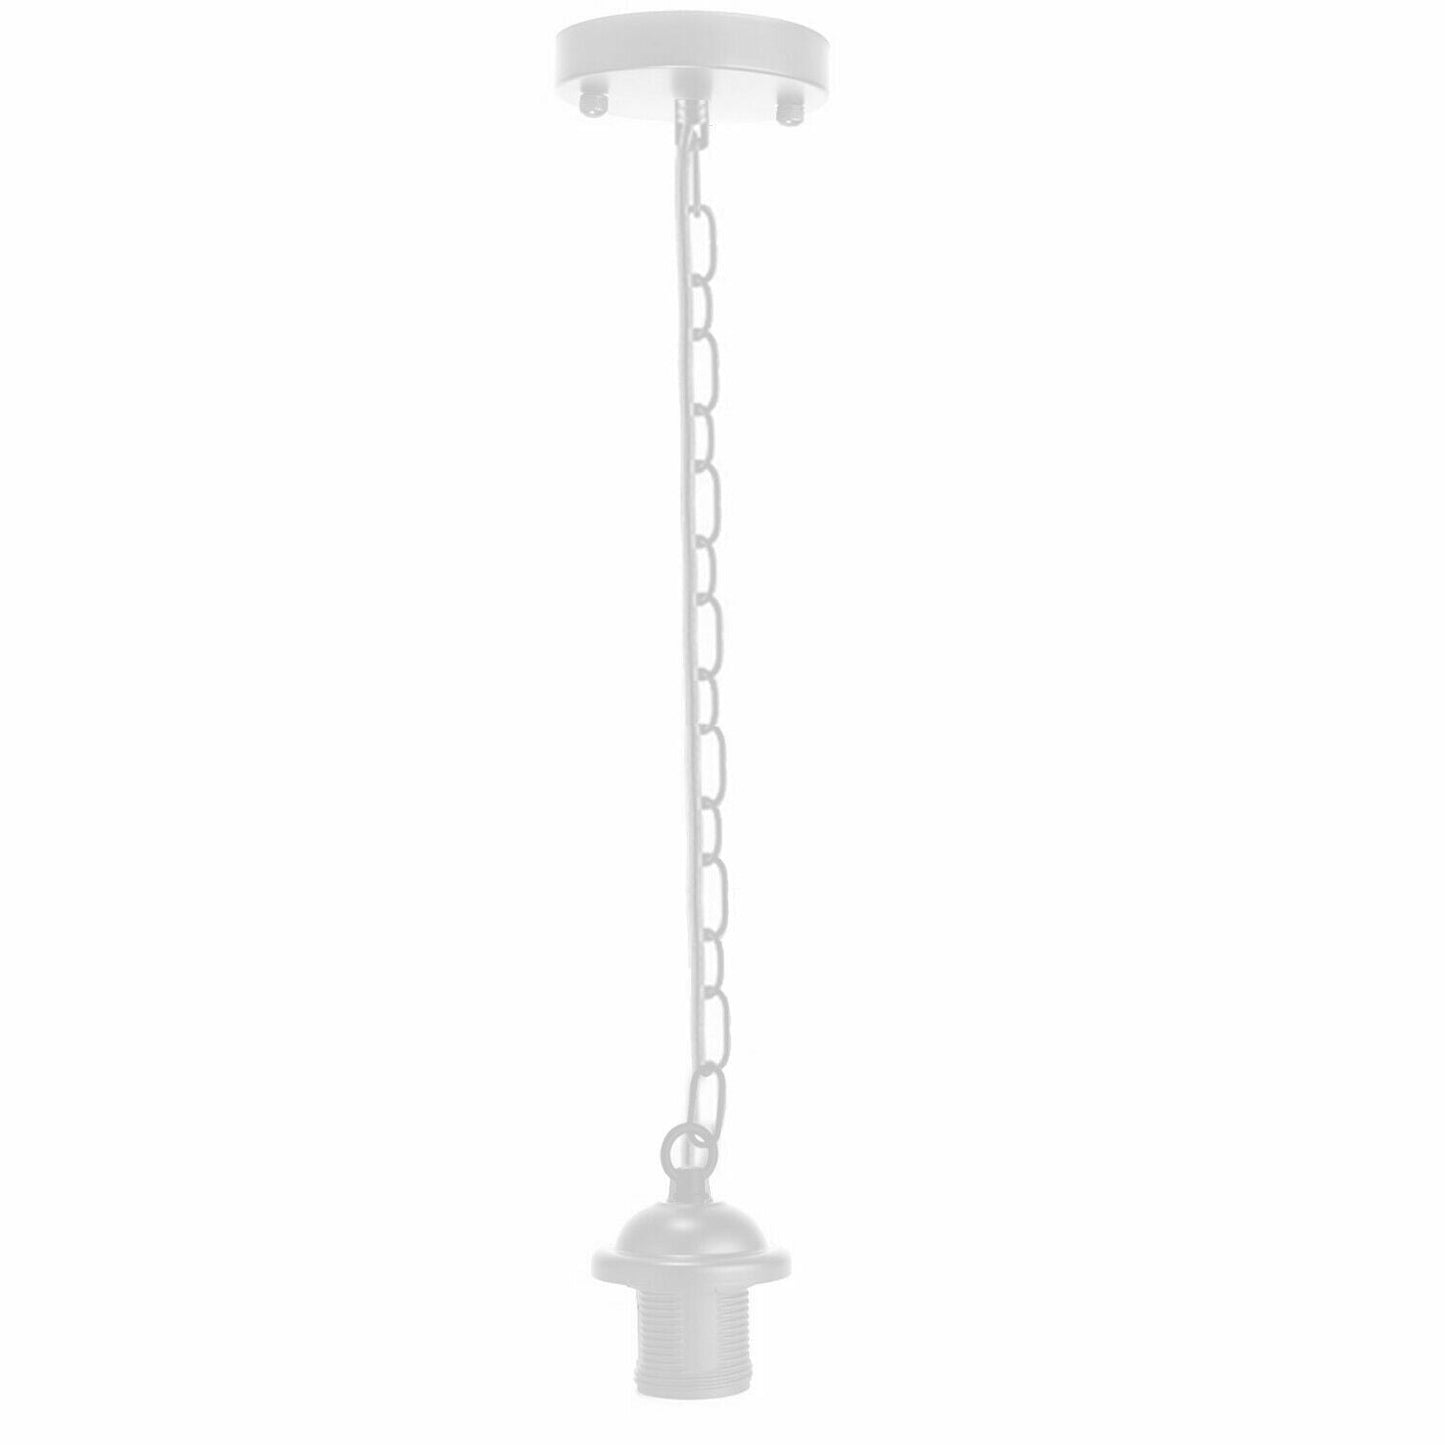 white Metal Ceiing E27 Lamp Holder Pendant Light With Chain